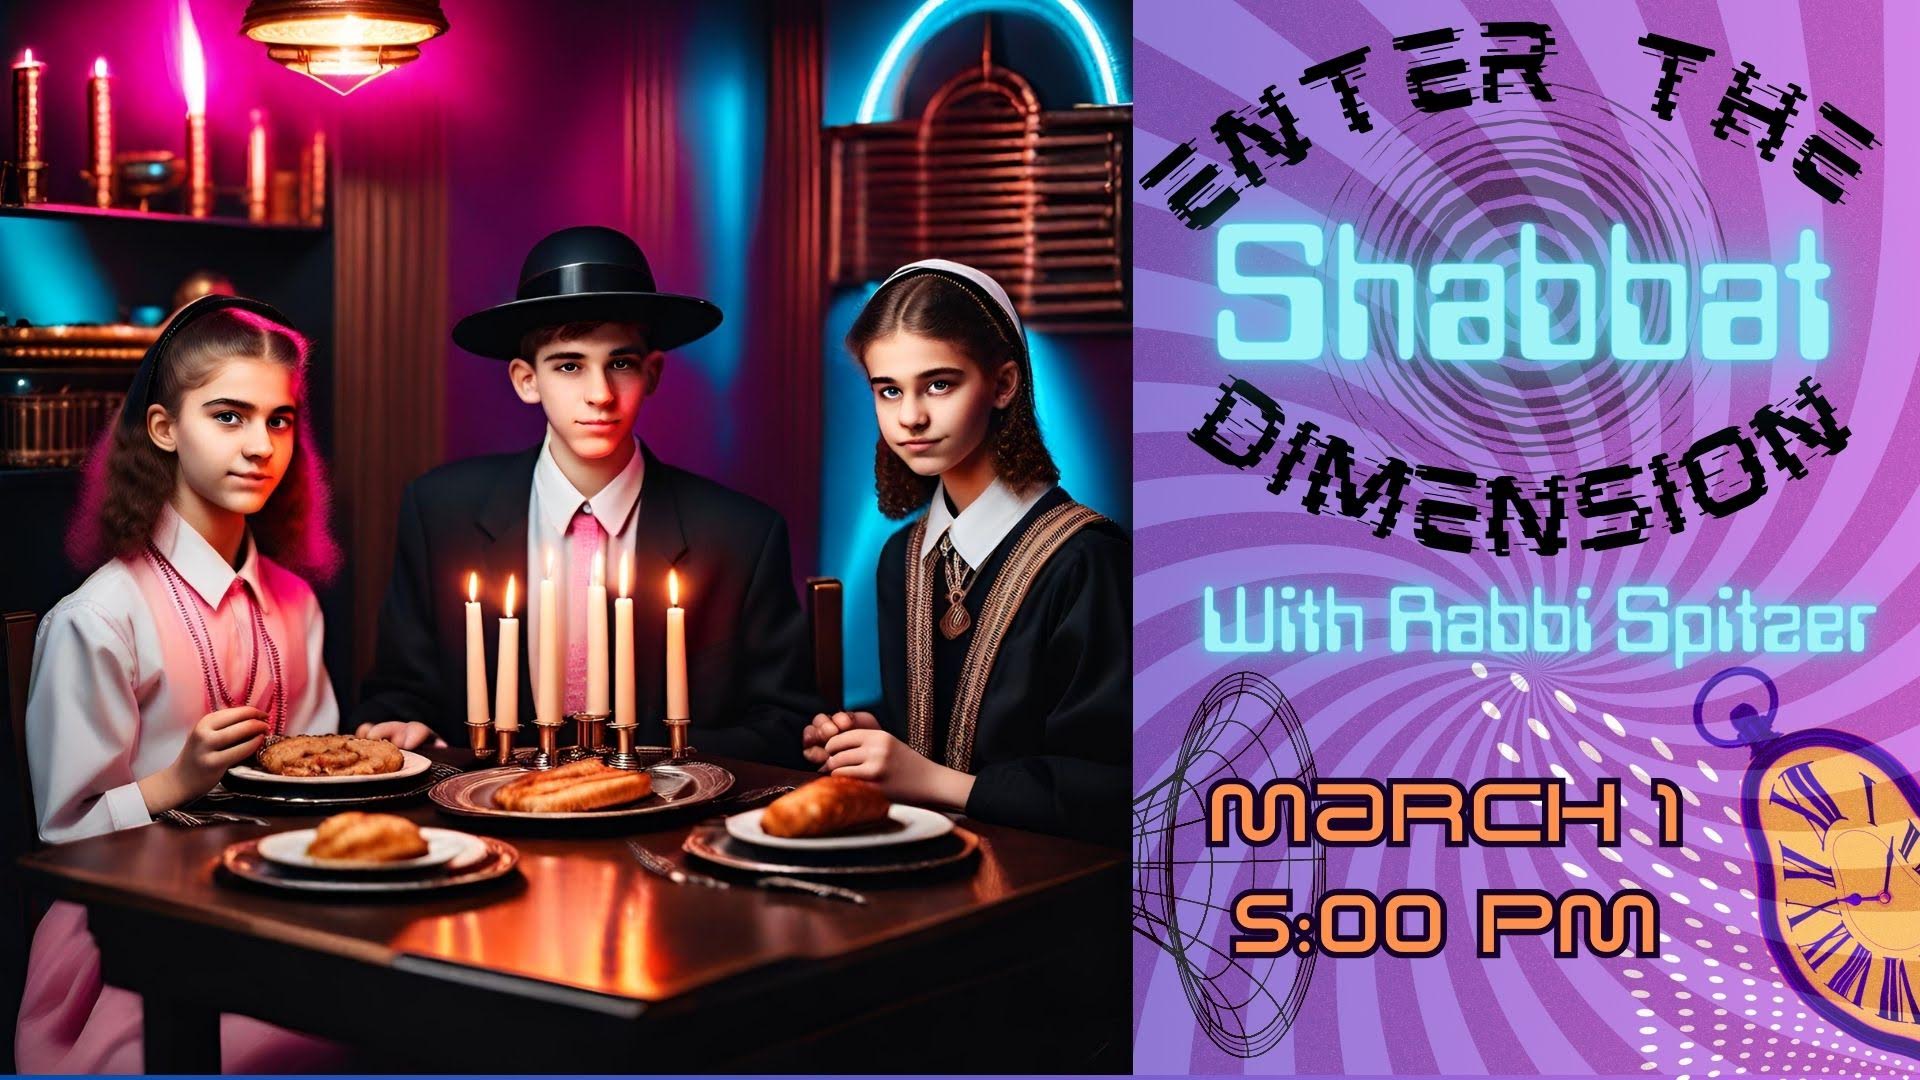 USY Dinner With Rabbi Spitzer